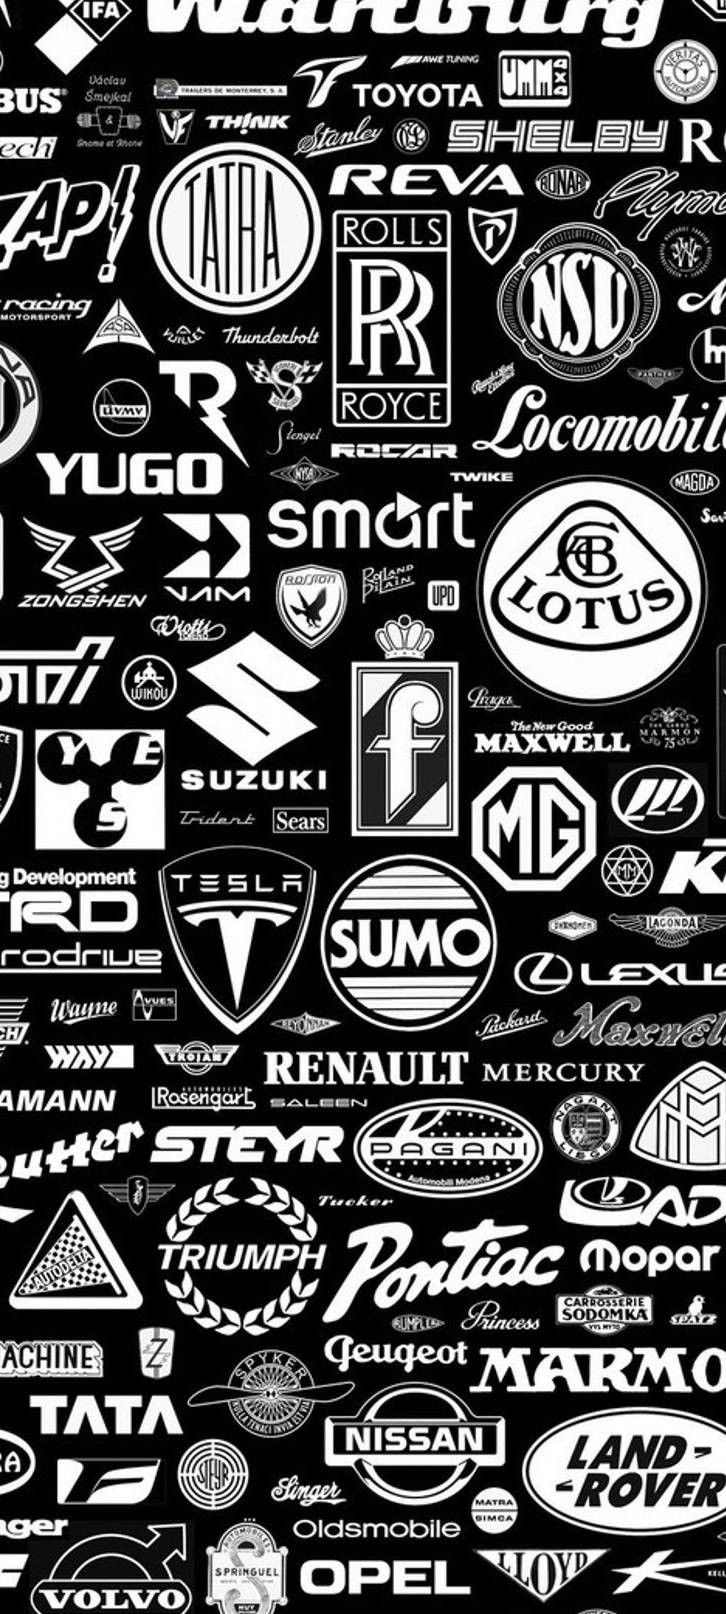 Free Logo Maker 20 Million Logos Made. LOGO.com. Car logos, All car logos, Car wallpaper